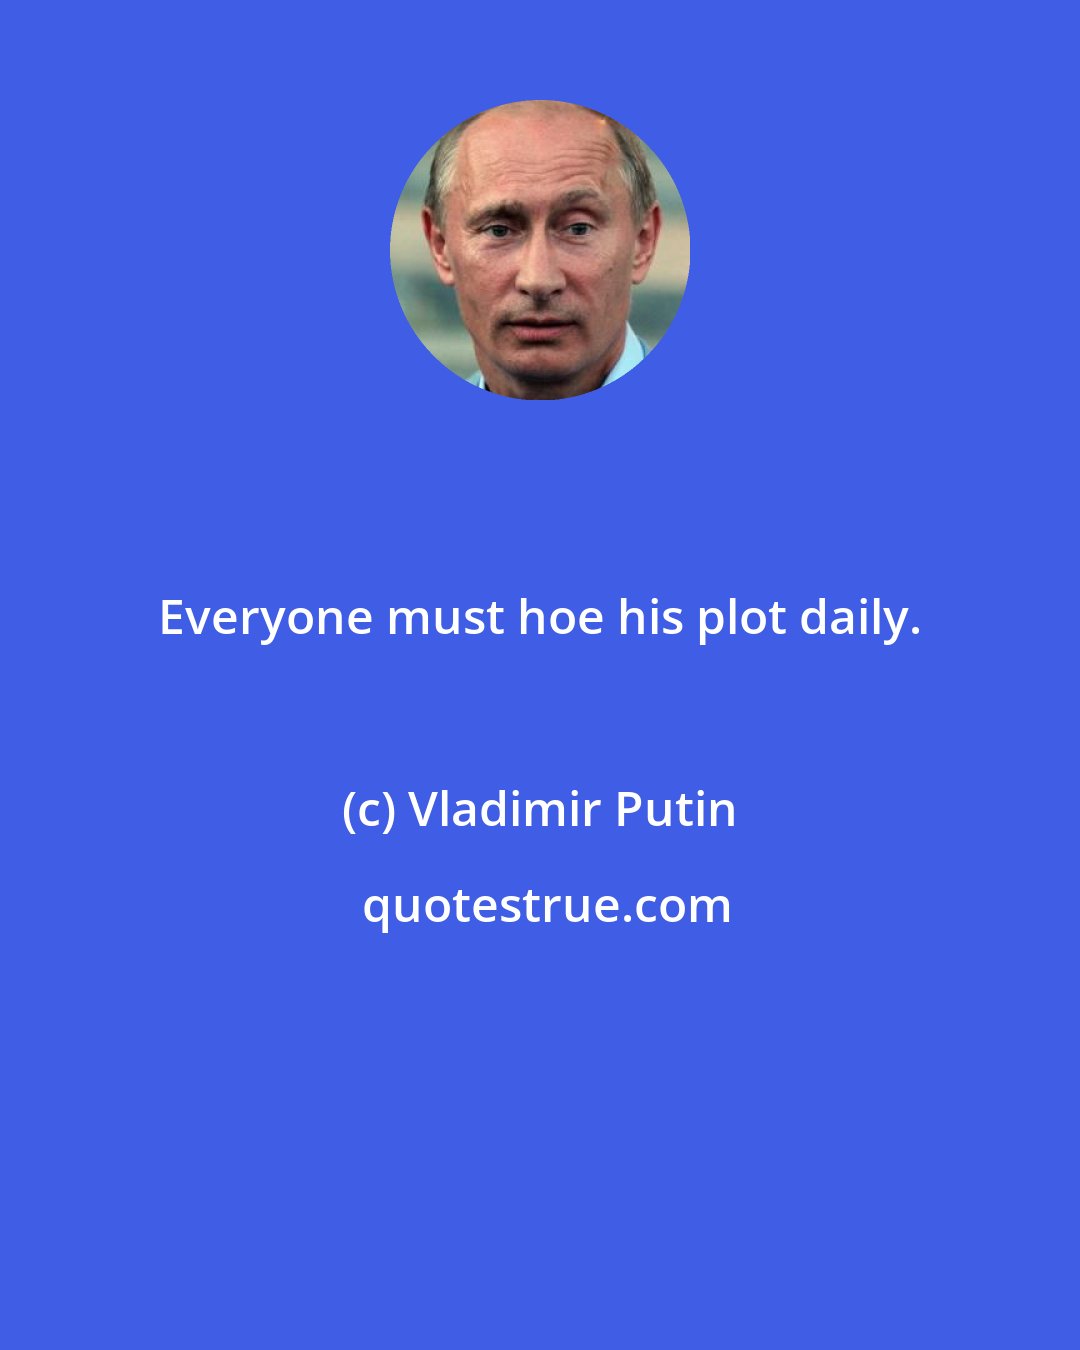 Vladimir Putin: Everyone must hoe his plot daily.